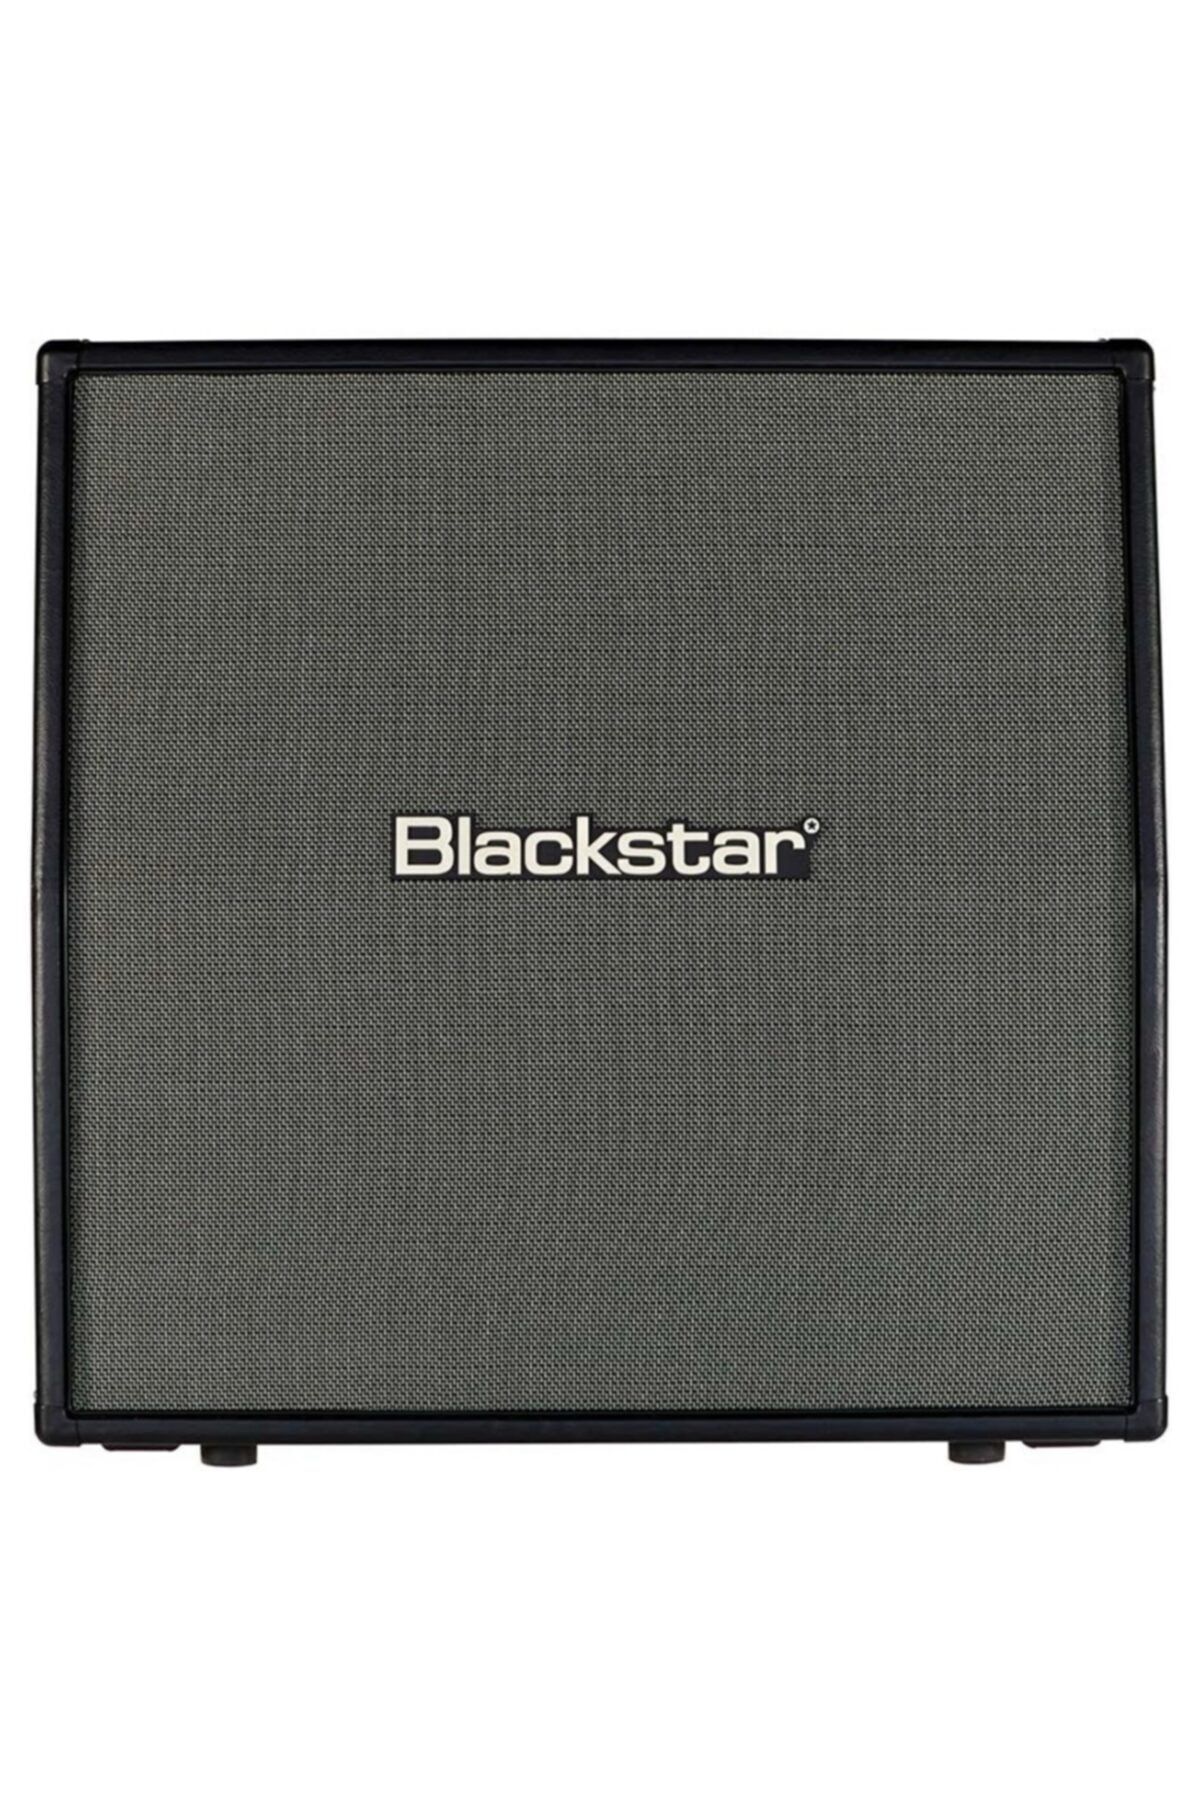 Blackstar Htv-412a Elektro Gitar Kabini